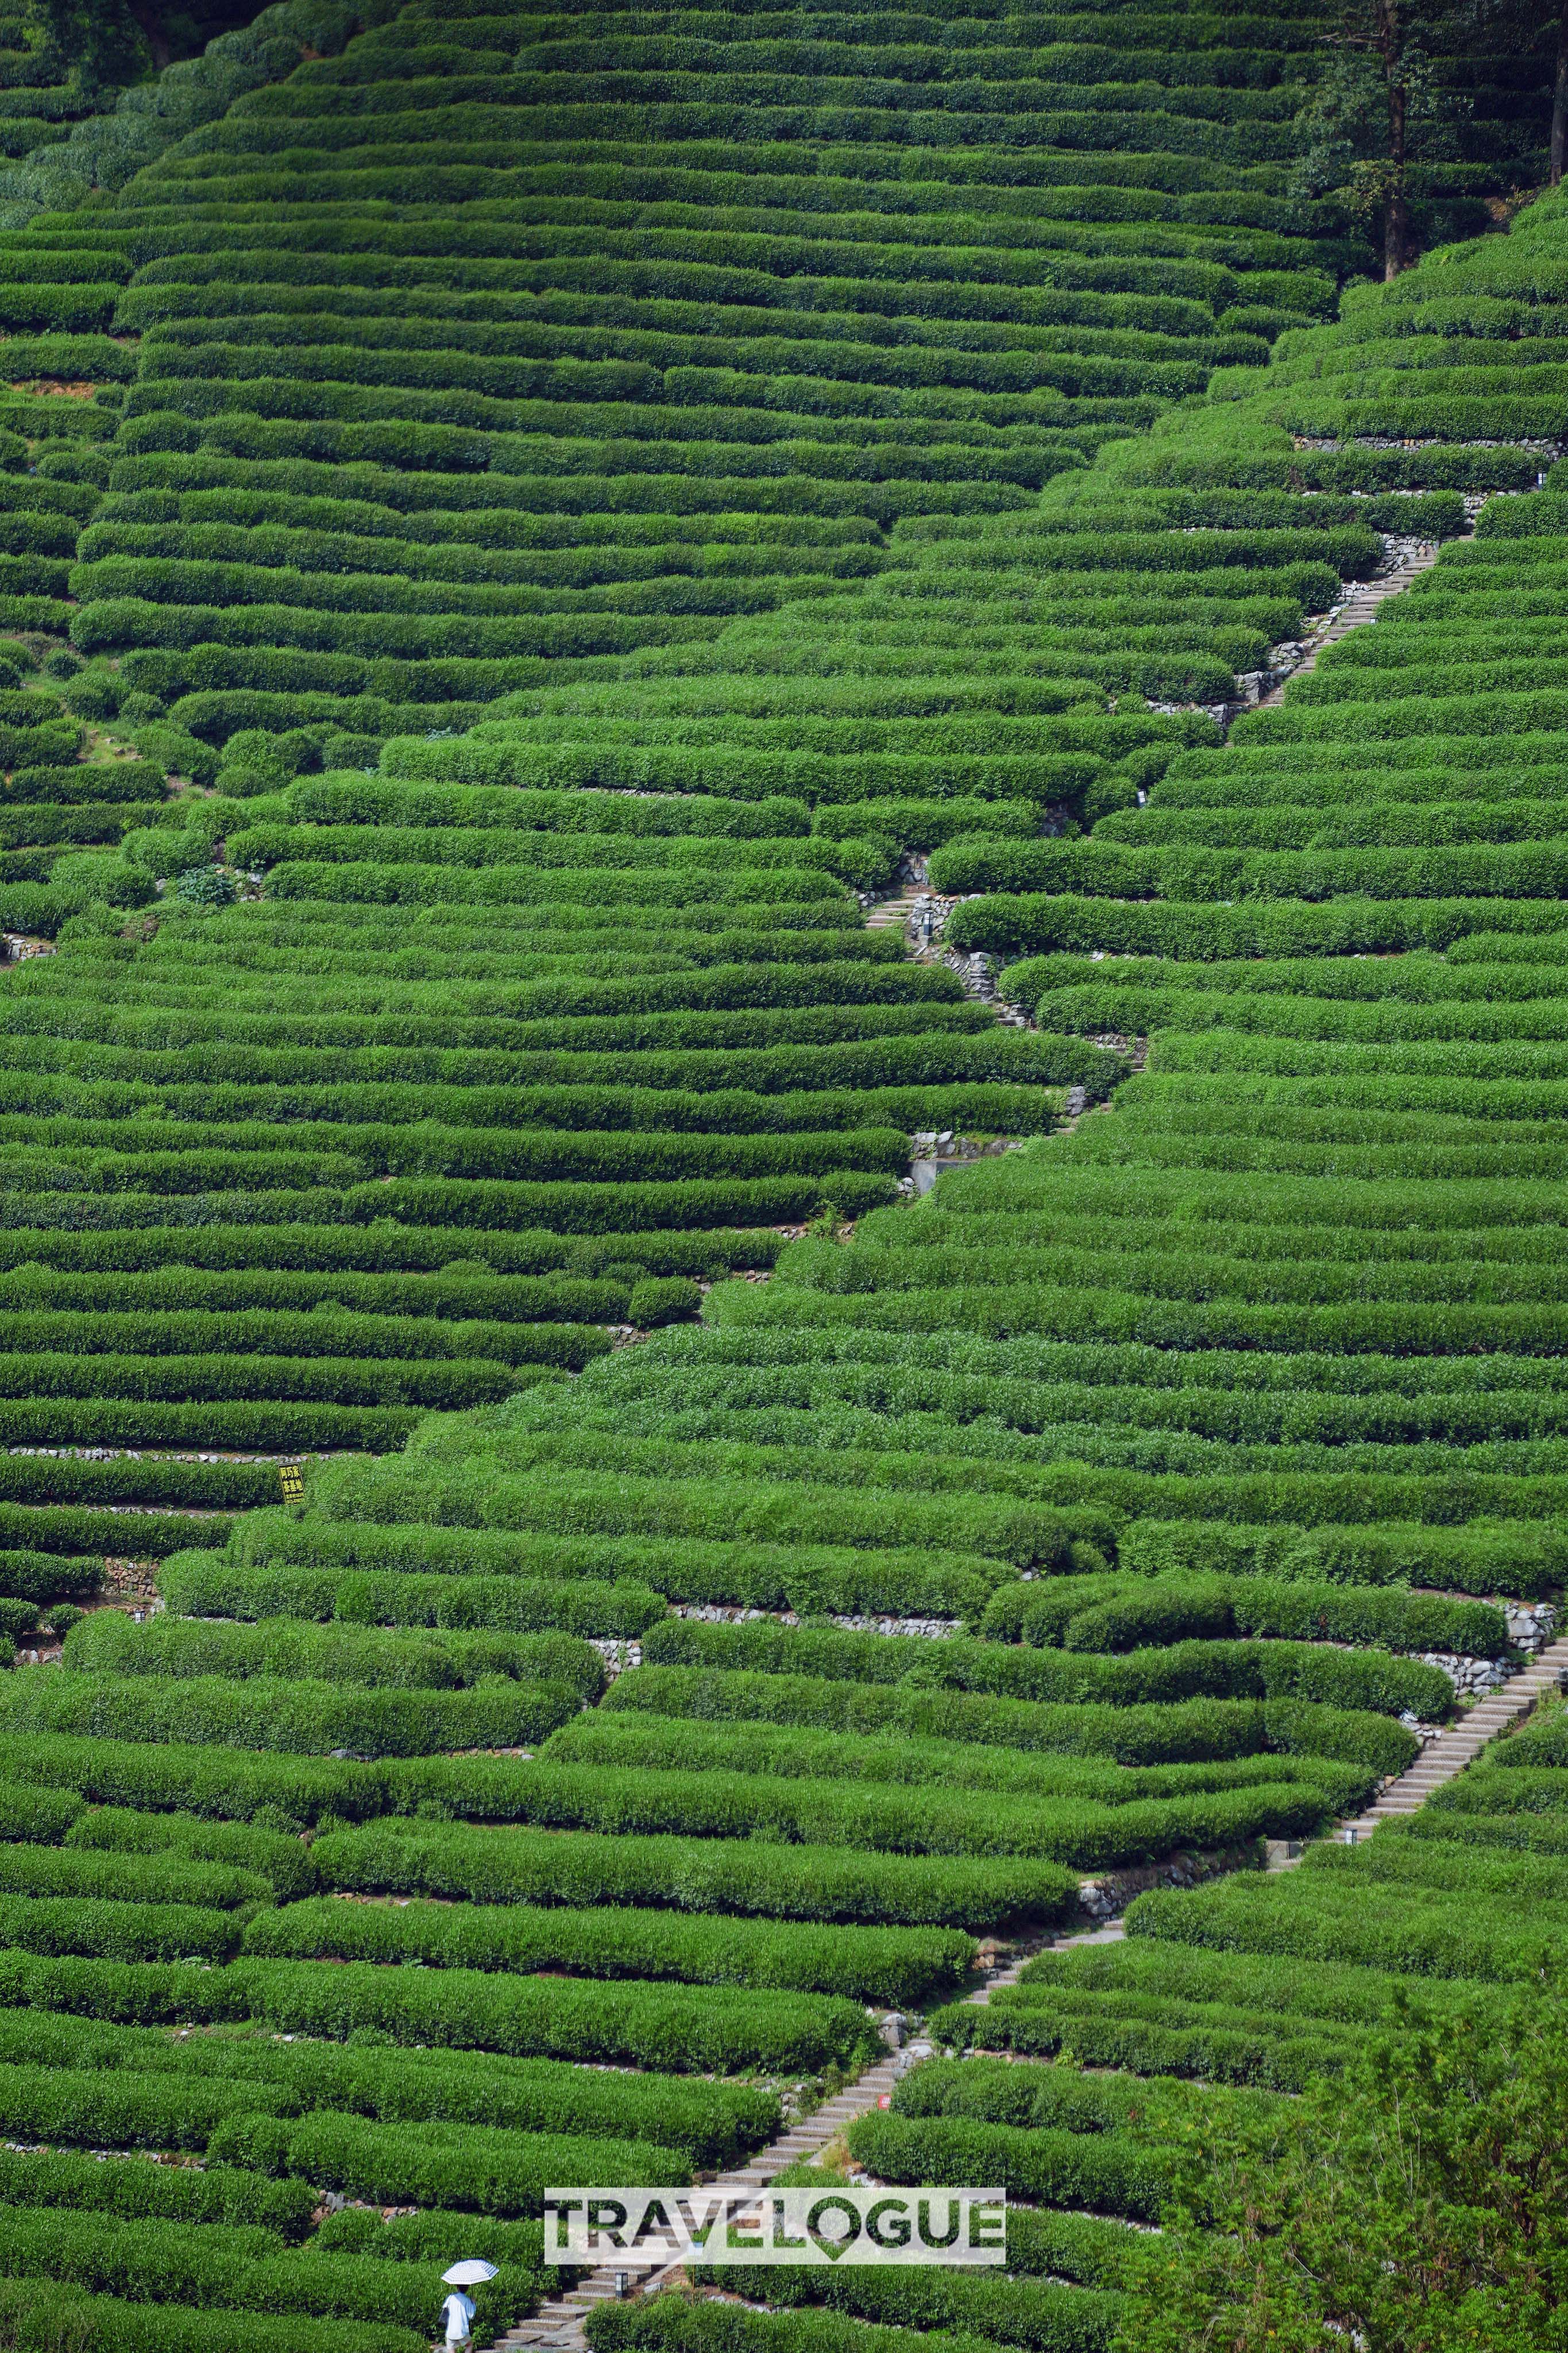 This undated photo shows a Longjing tea plantation in Hangzhou, east China's Zhejiang Province. /CGTN